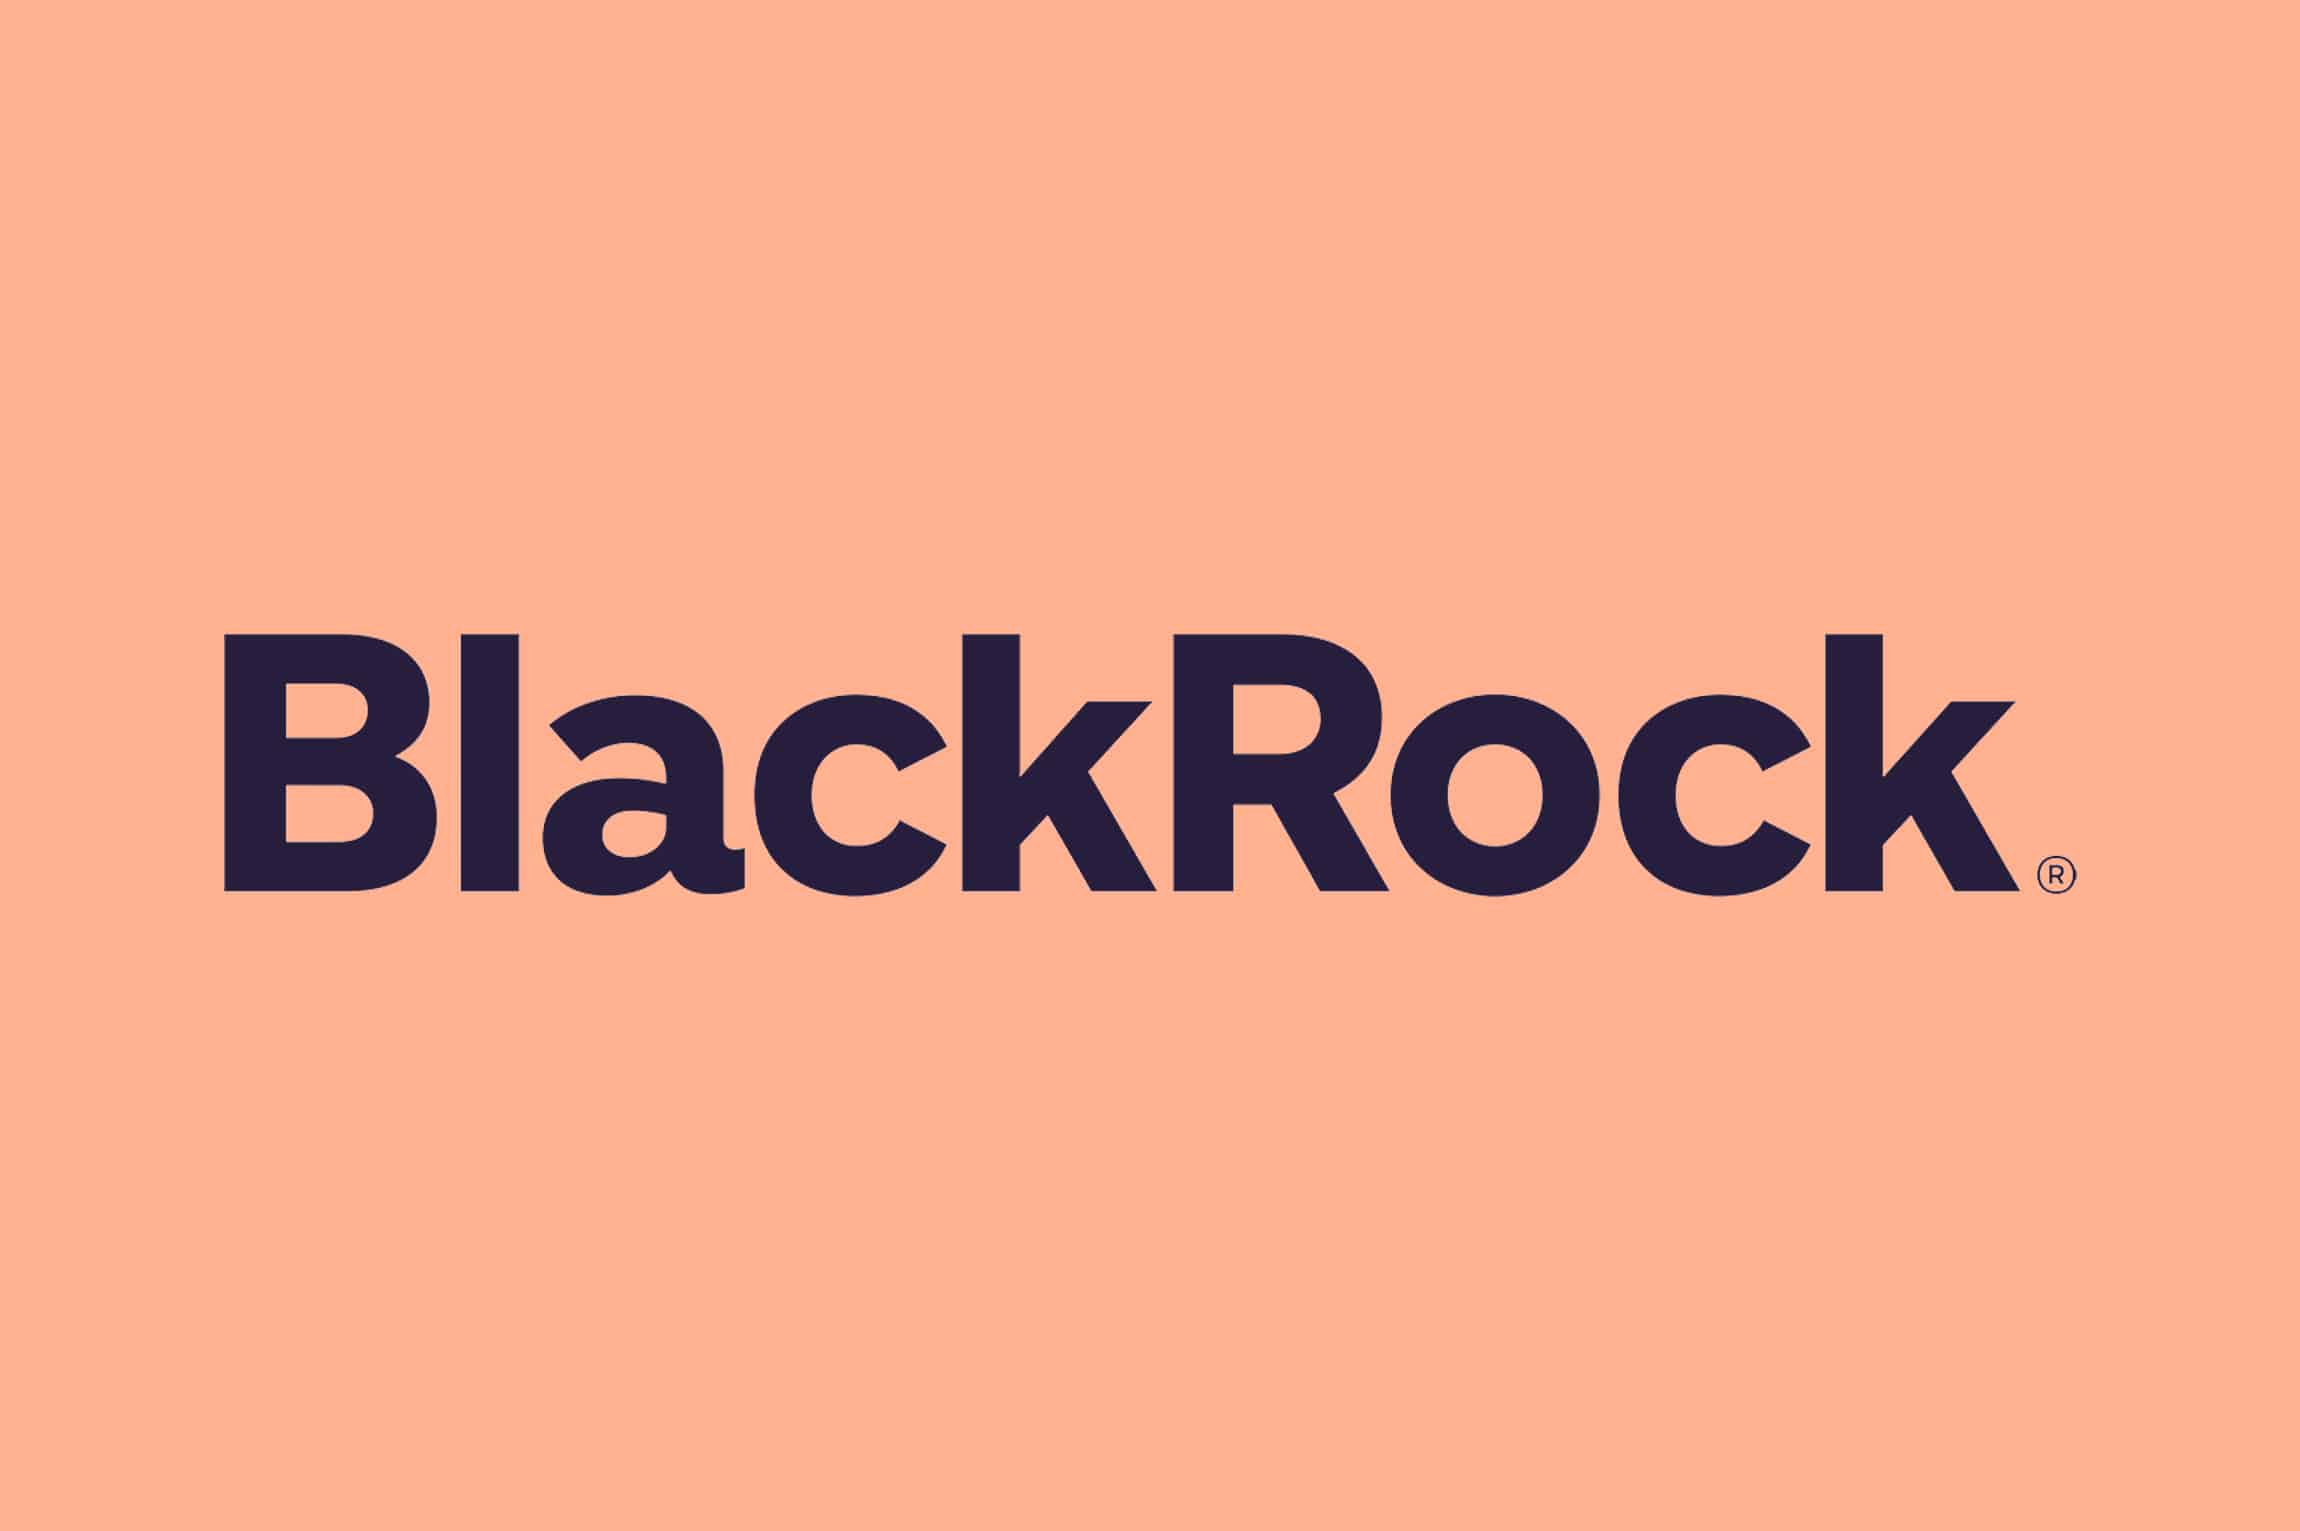 The BlackRock logo on an orange background